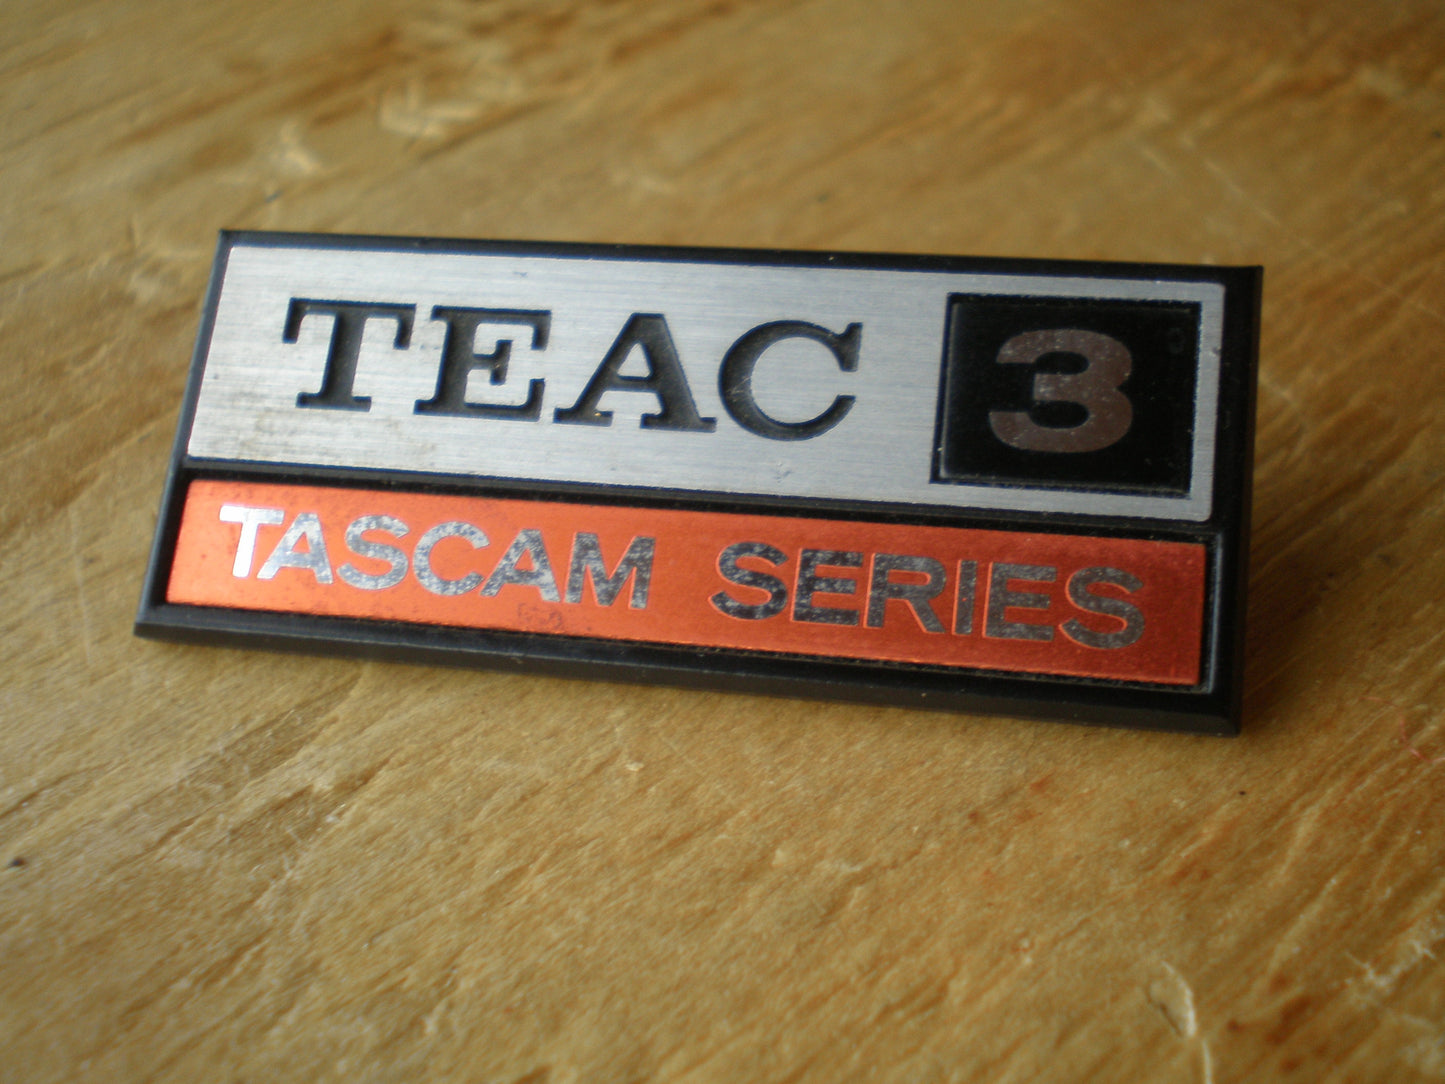 Teac Tascam 3 mixer badge